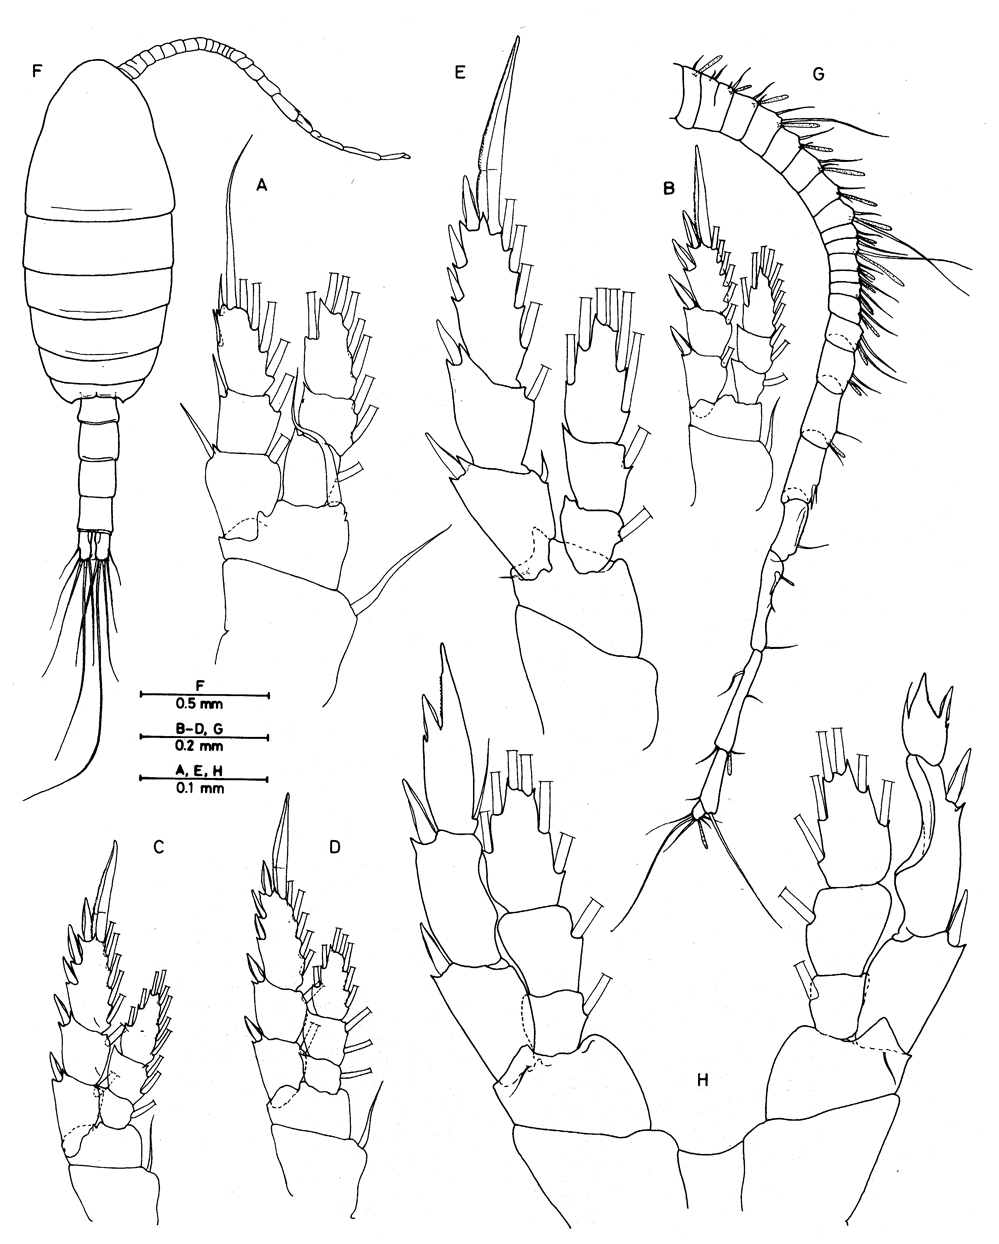 Espce Edaxiella rubra - Planche 2 de figures morphologiques